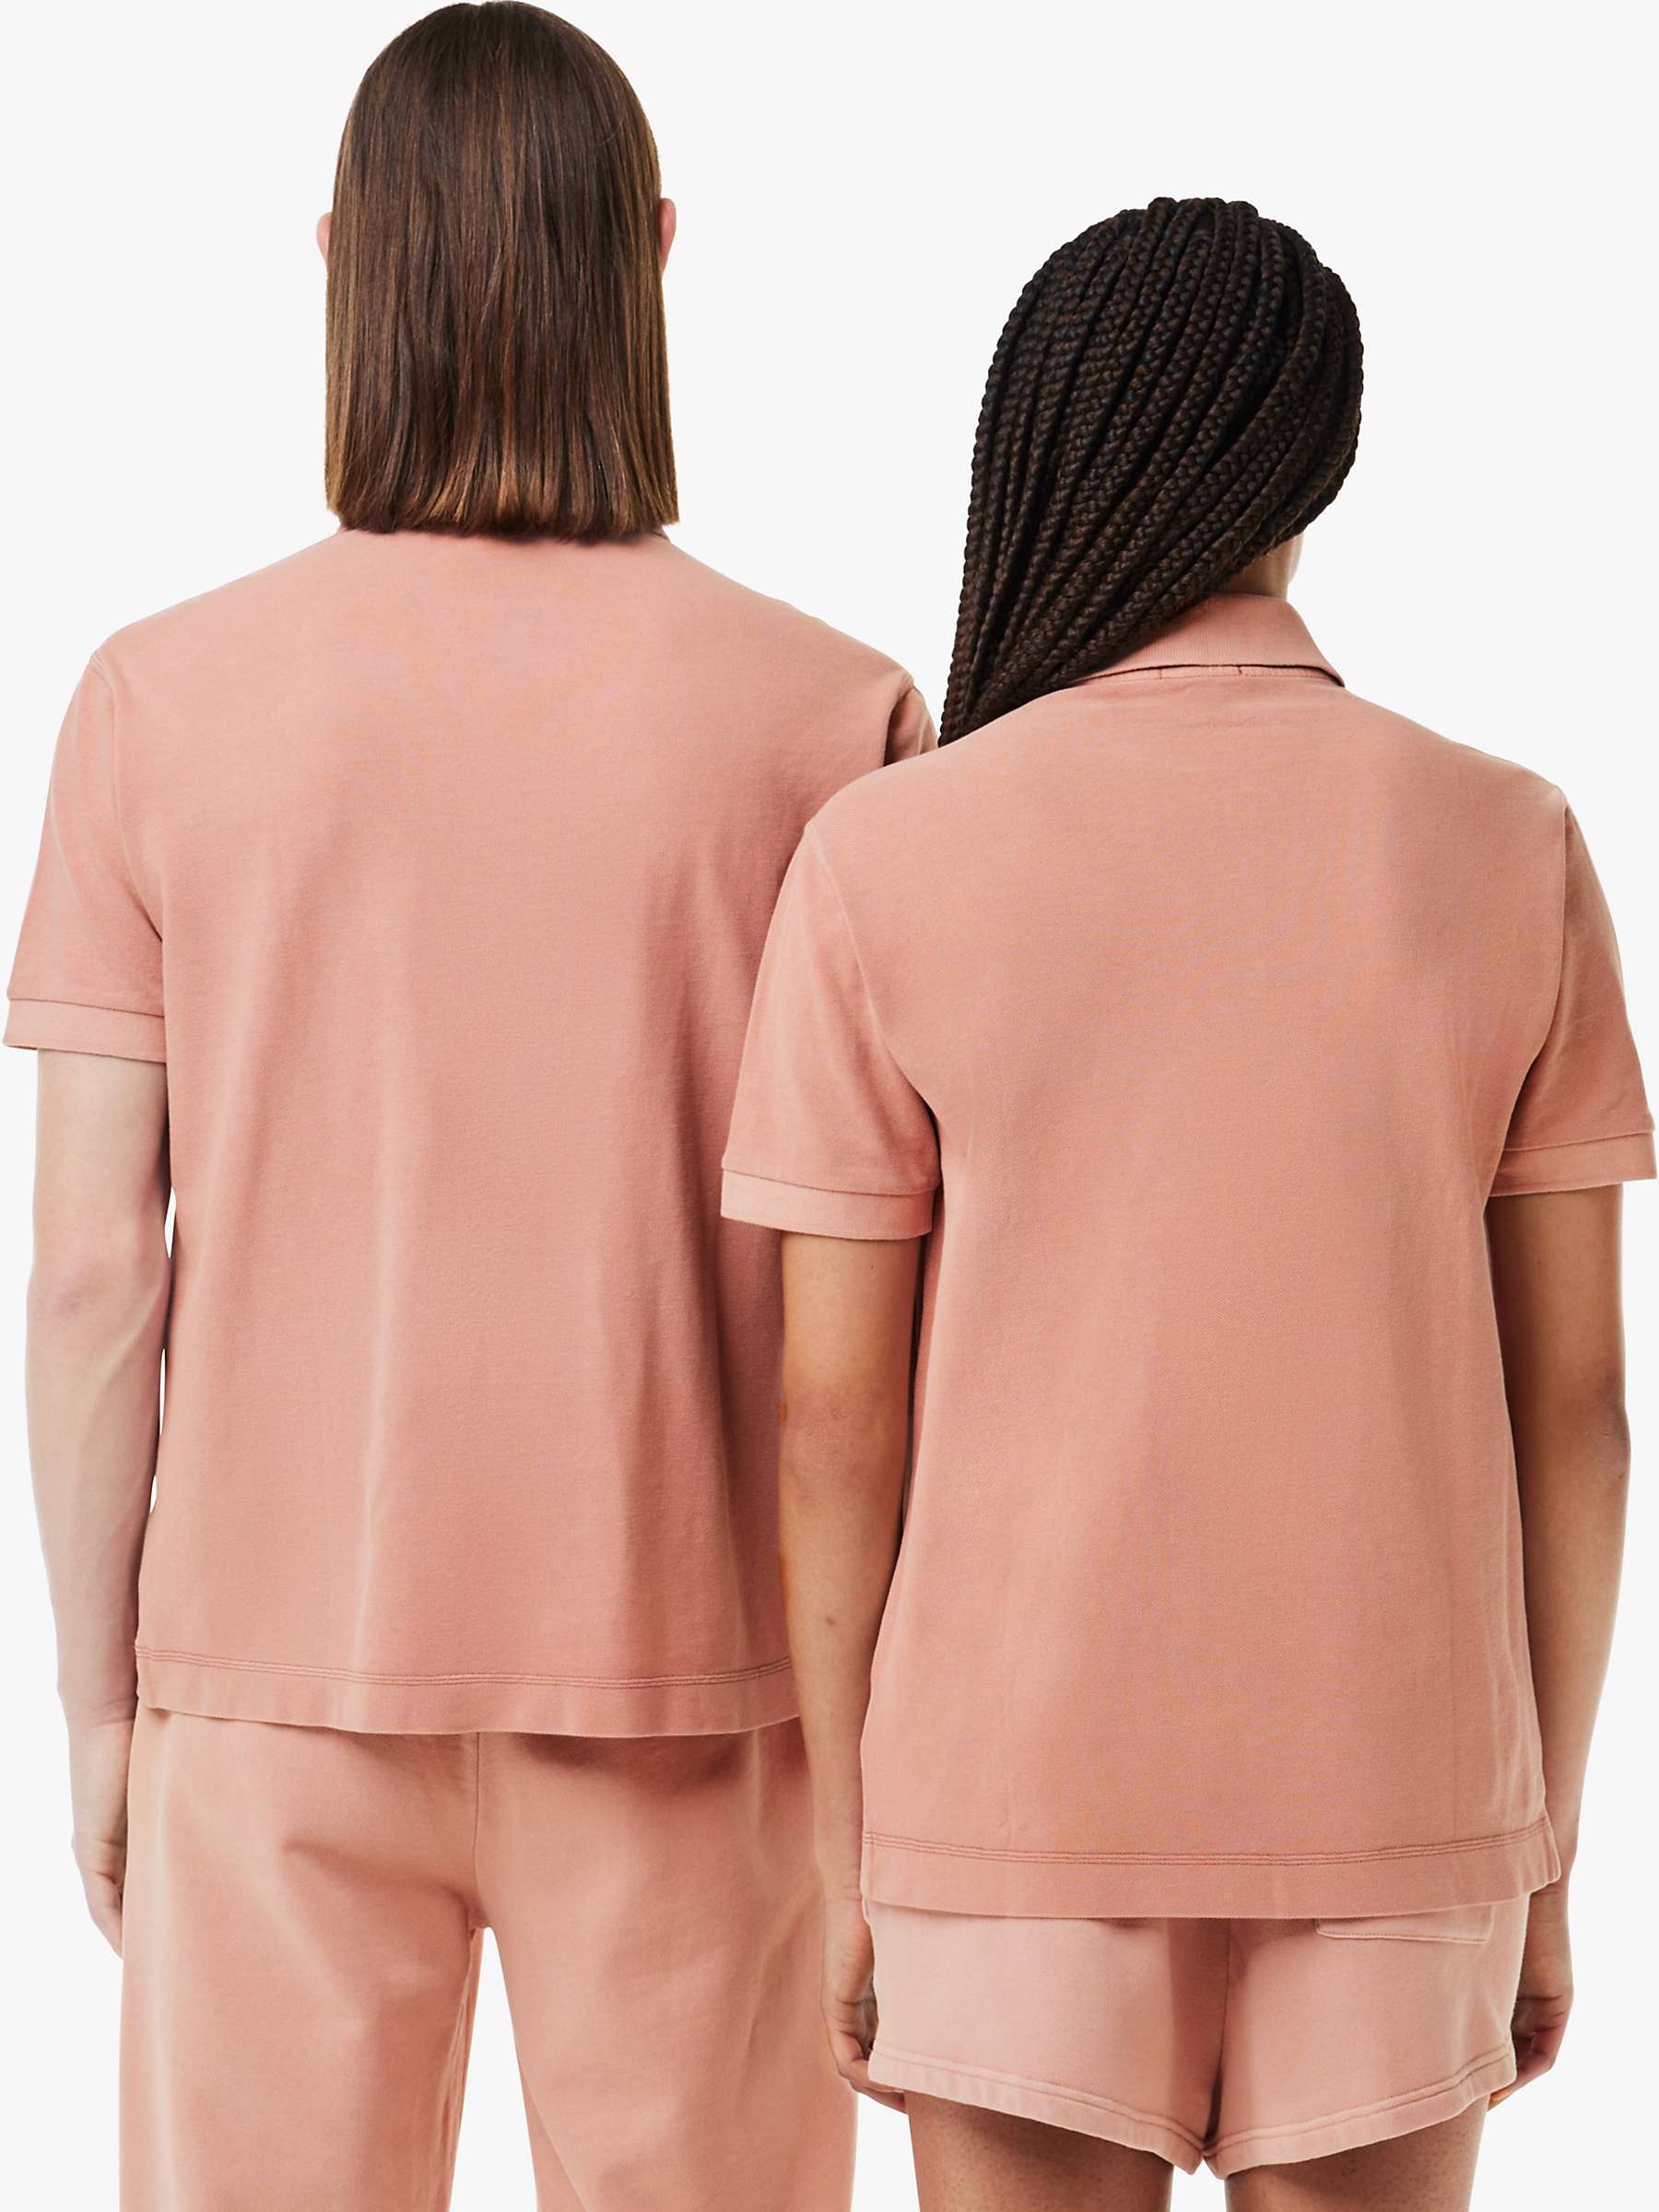 Buy Lacoste Classic Fit Cotton Piqué Short Sleeve Polo Shirt, Eco Pink Online at johnlewis.com